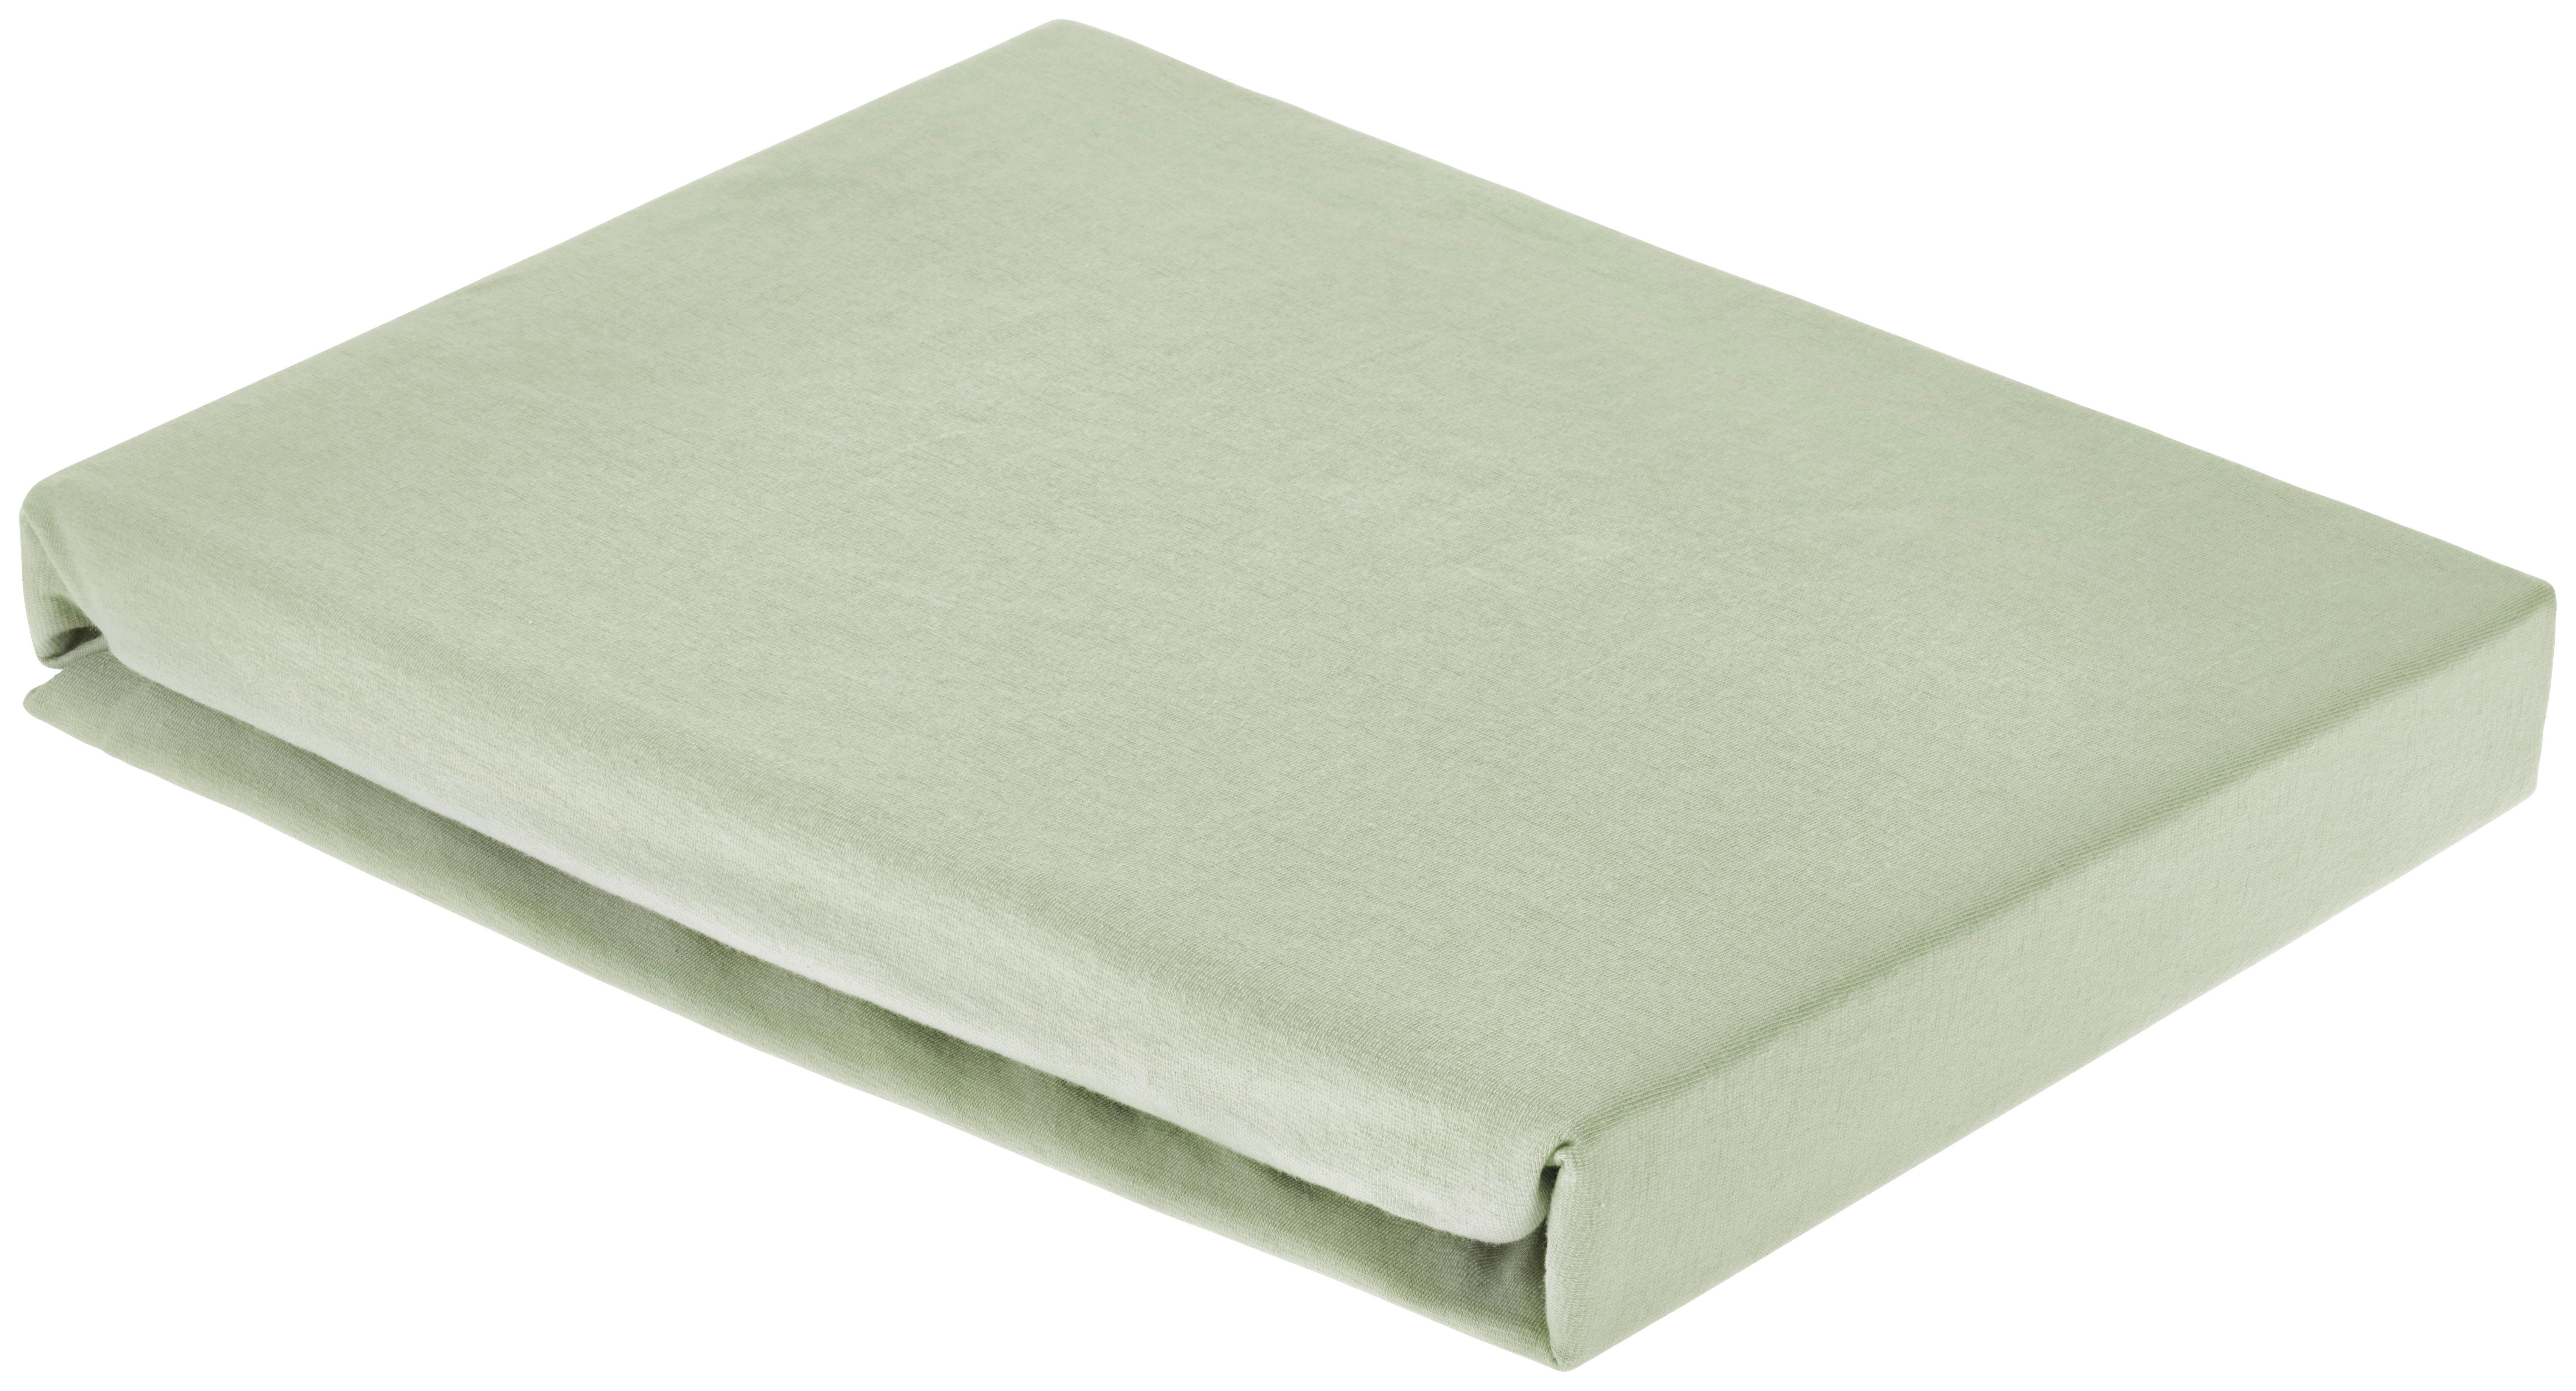 Boxspringové Prostěradlo Elasthan Hoch, 100/200cm - zelená, textil (100/200cm) - Premium Living